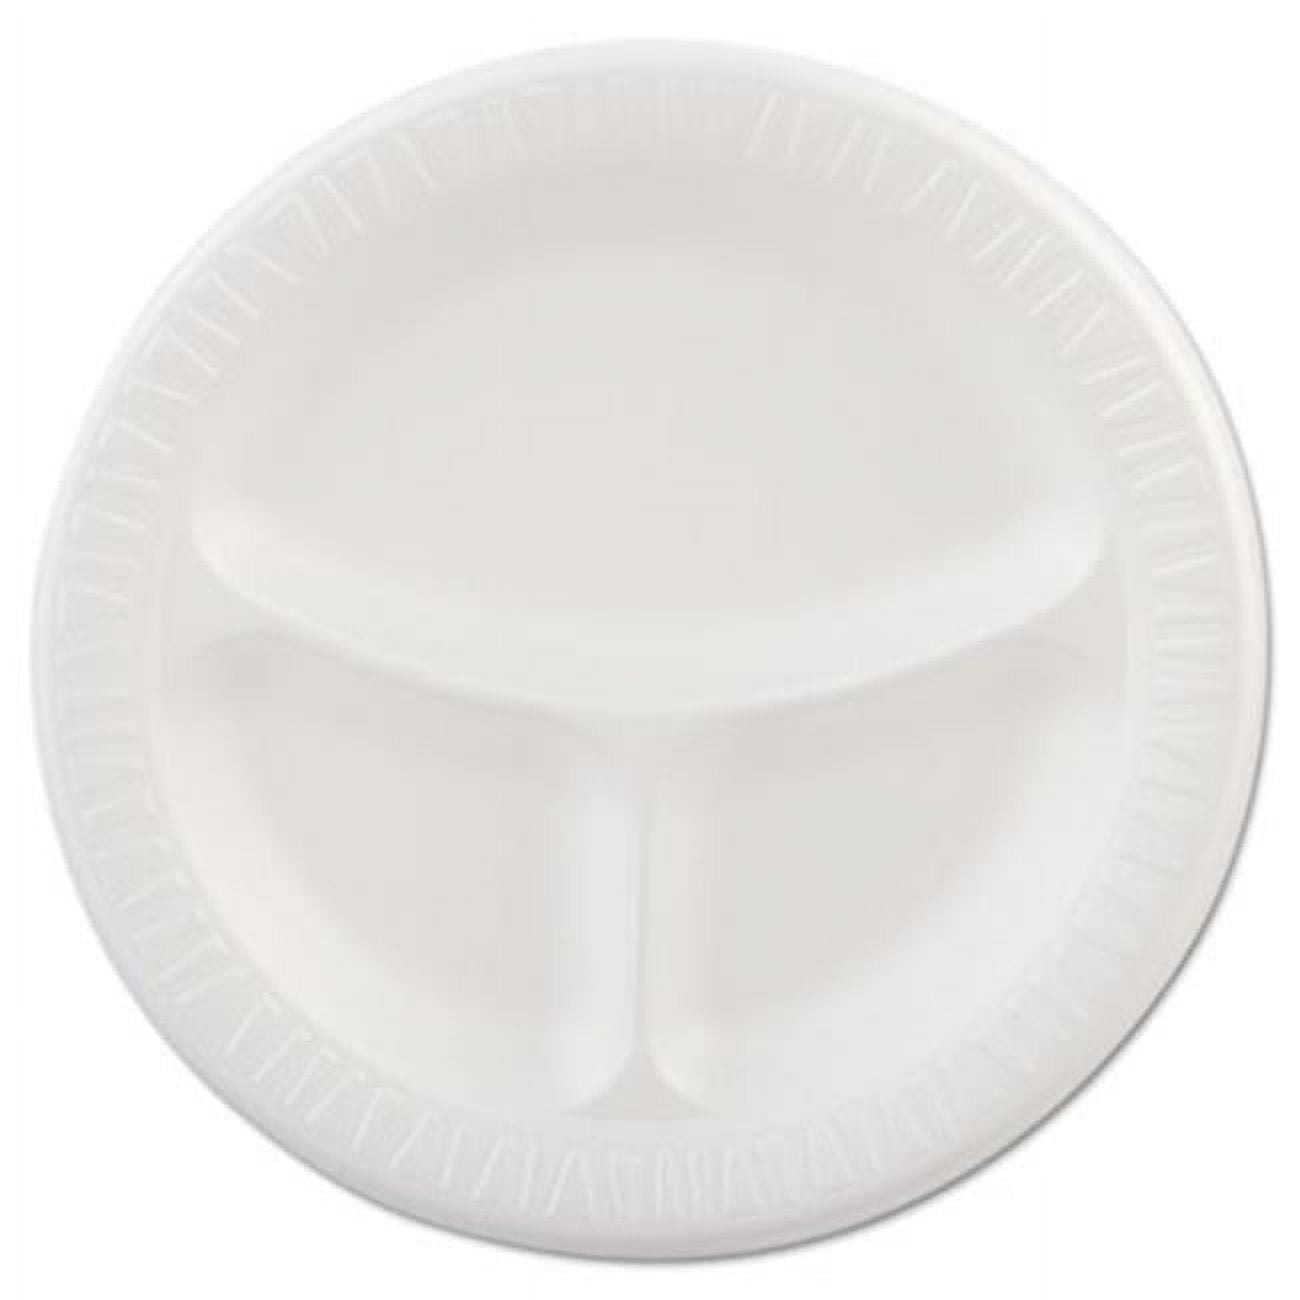 OFTAST Plate - white 9 ¾